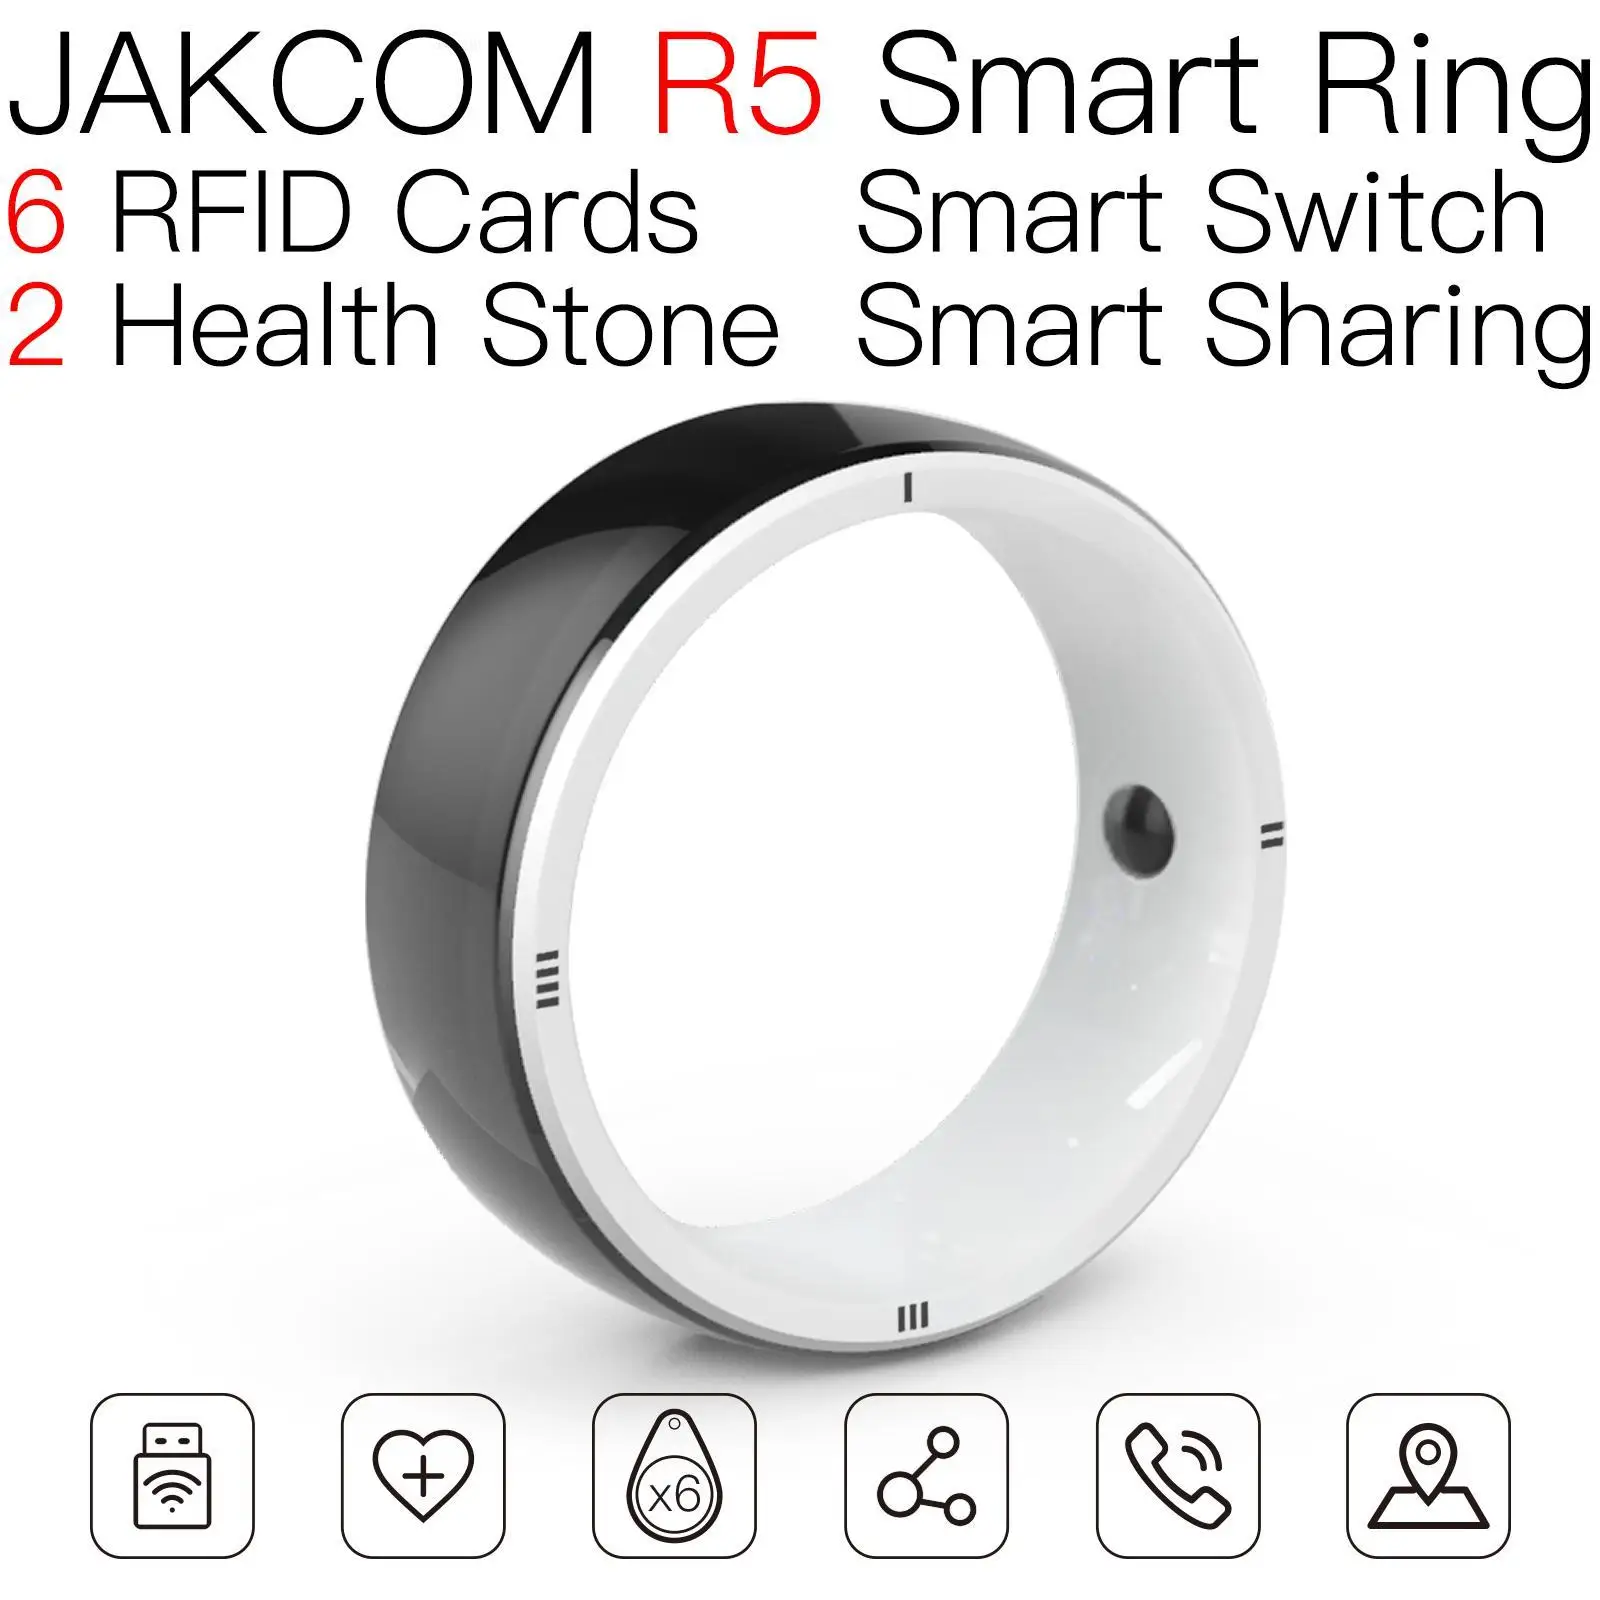 

JAKCOM R5 Smart Ring Match to rfid 125khz etiquette hf tag 1 mes cuentas amazon prime video 6 months 125k pig